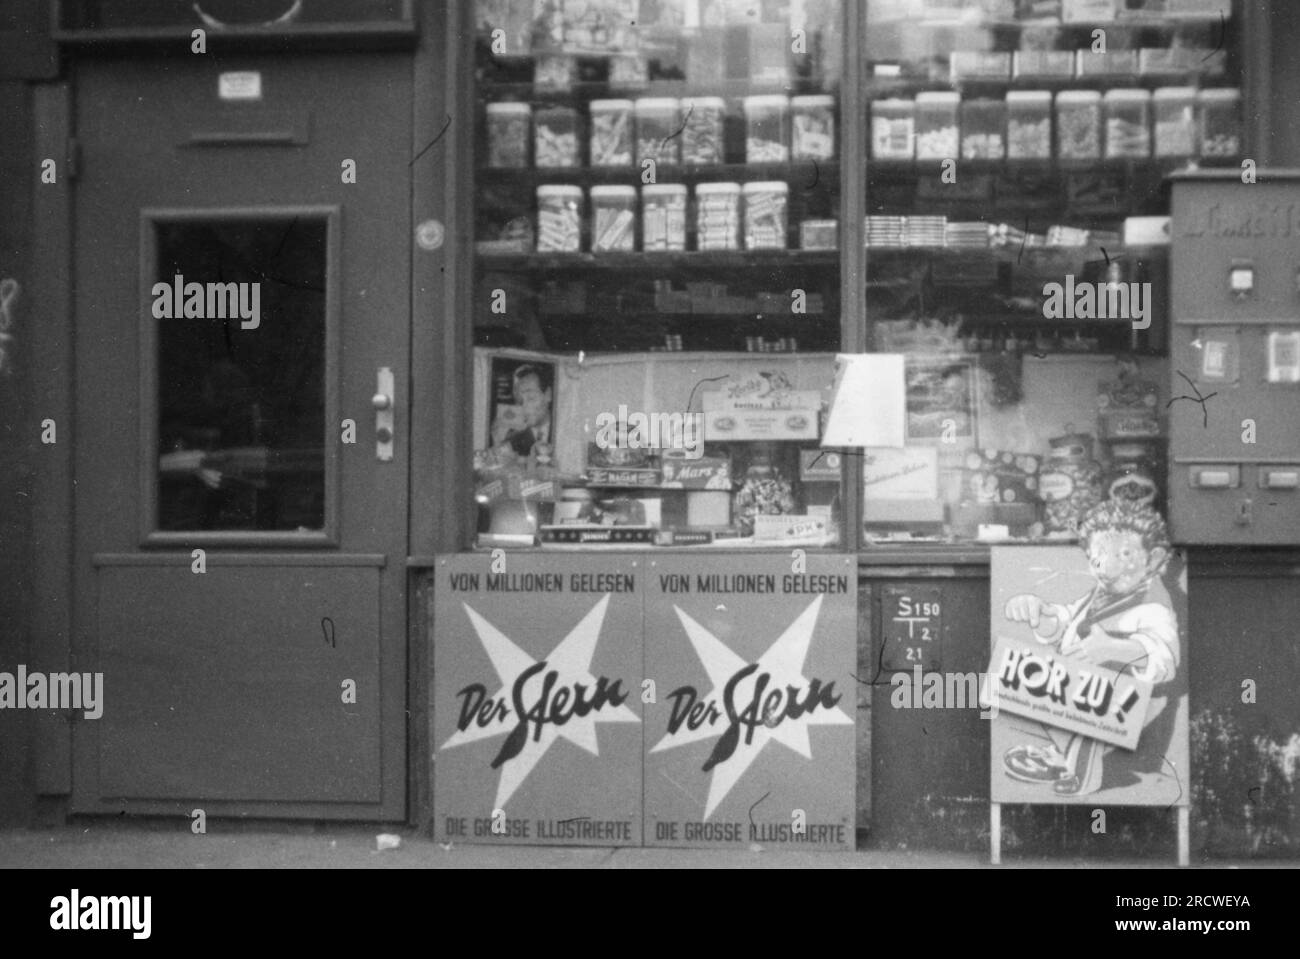 Handel, Geschäfte, Zeitungskiosk, in der Kirche St. Petri, Hamburg, Anfang 1950er, ZUSÄTZLICHE-RECHTE-FREIGABE-INFO-NICHT-VERFÜGBAR Stockfoto